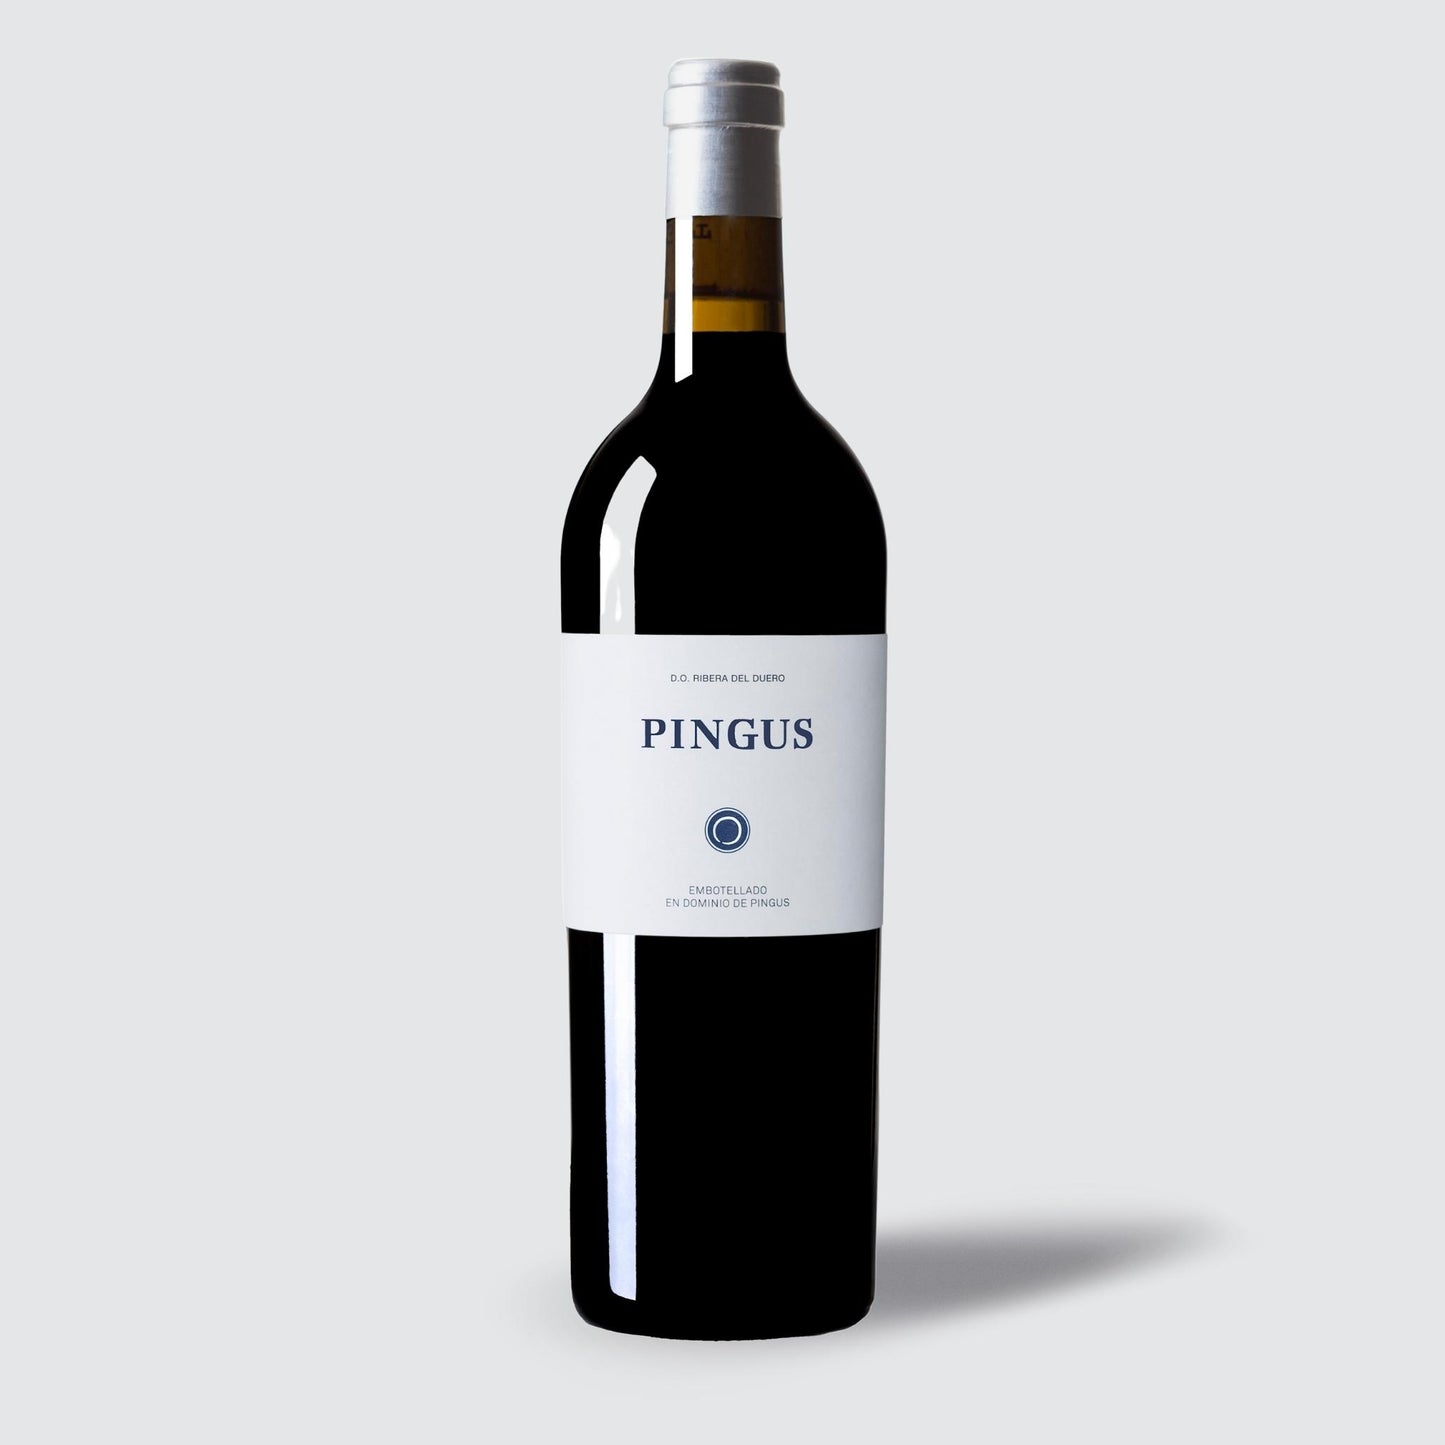 Dominio de Pingus 'Pingus' 2019 ribera del duero red wine